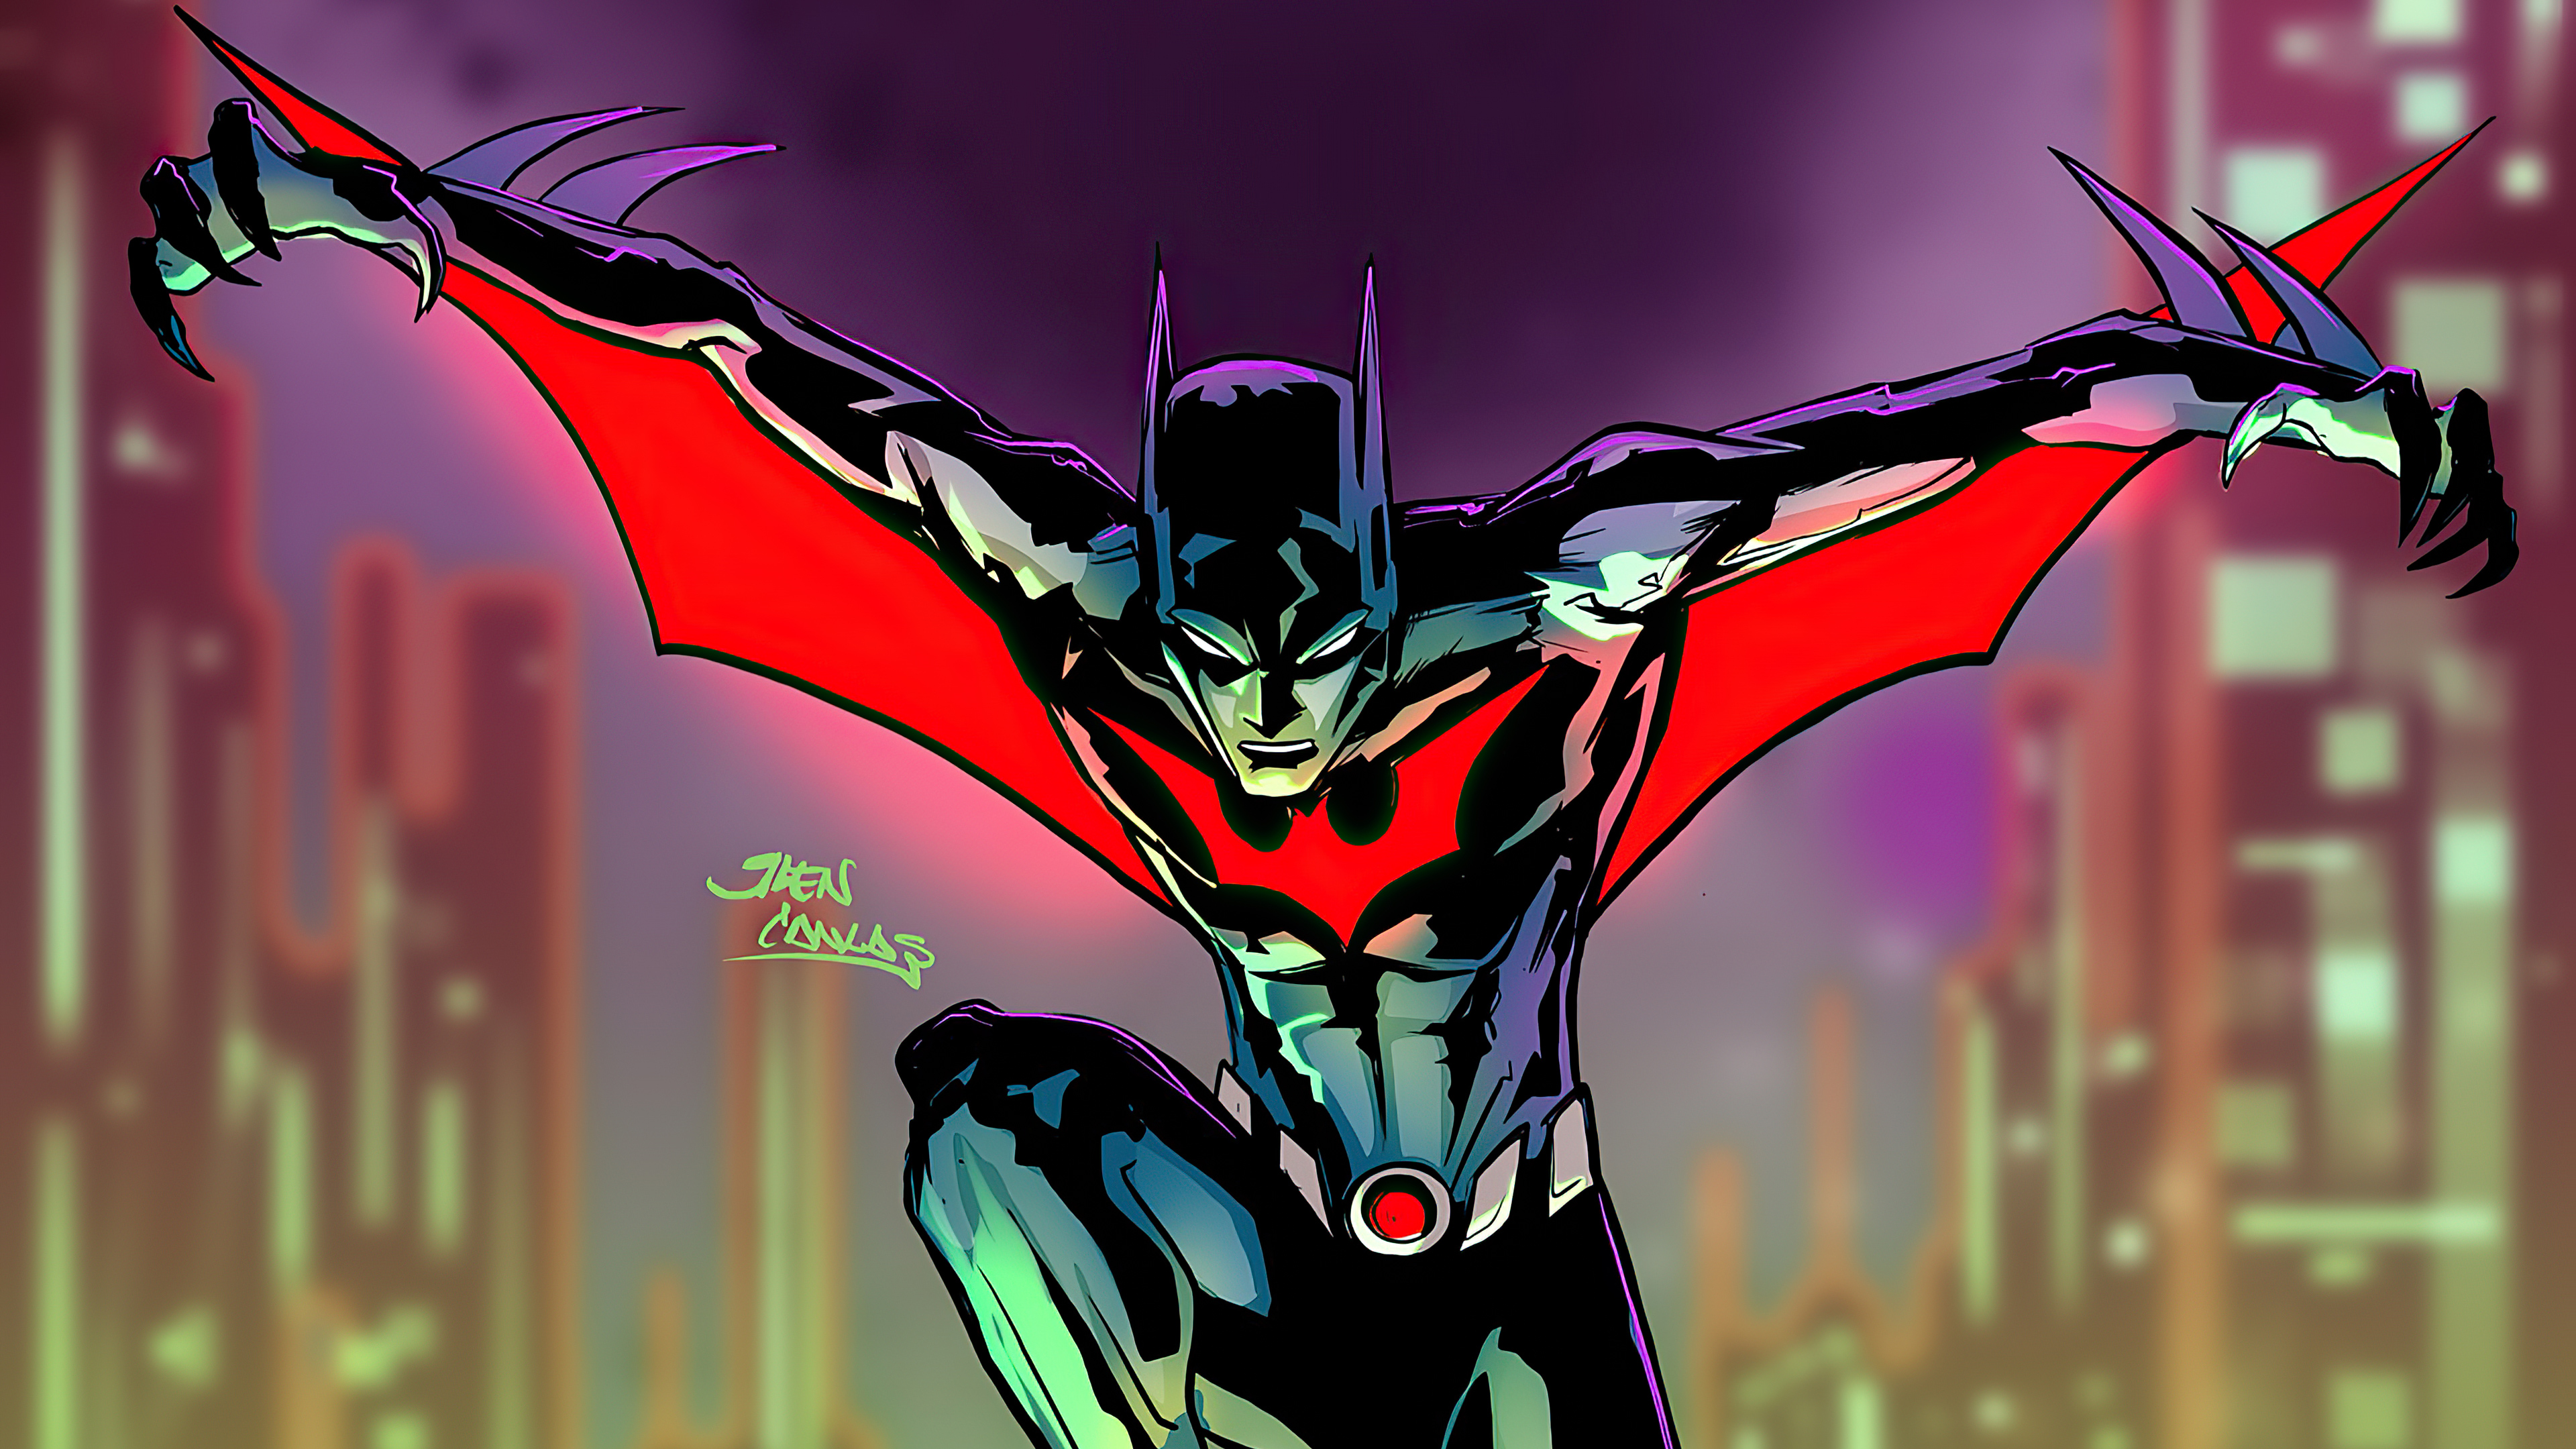 Скачать обои бесплатно Комиксы, Бэтмен, Комиксы Dc, Бэтмен Будущего картинка на рабочий стол ПК